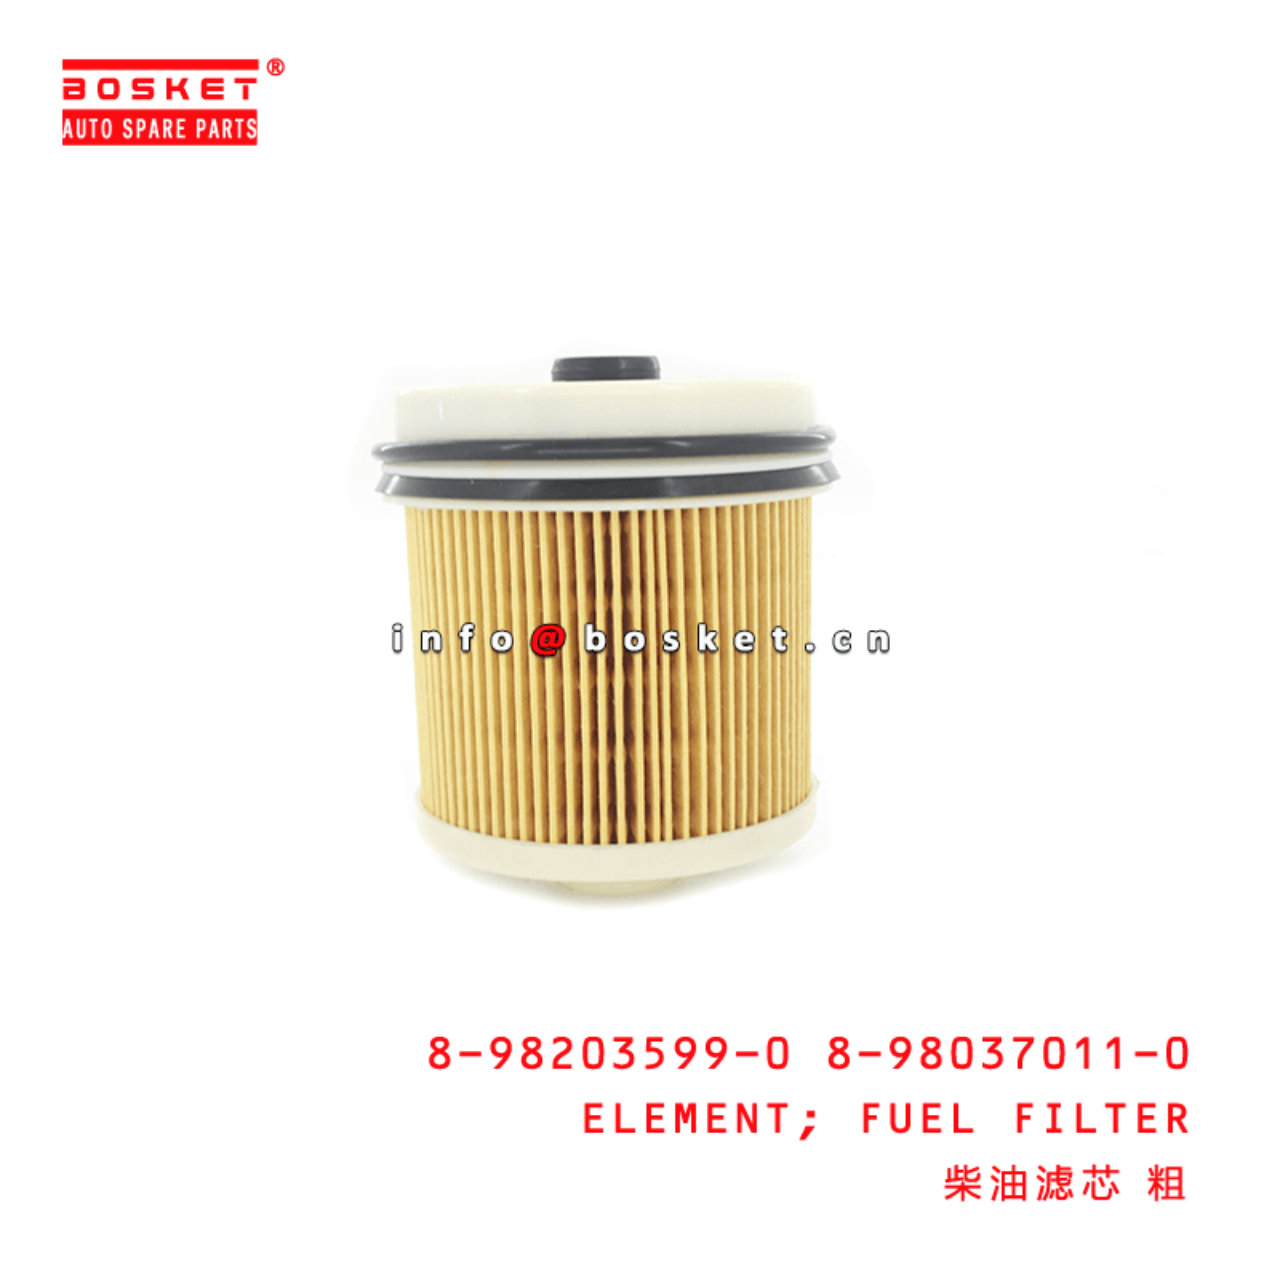 8-98203599-0 8-98037011-0 Fuel Filter Element 8982035990 8980370110 Suitable for ISUZU FRR FSR FTR 4